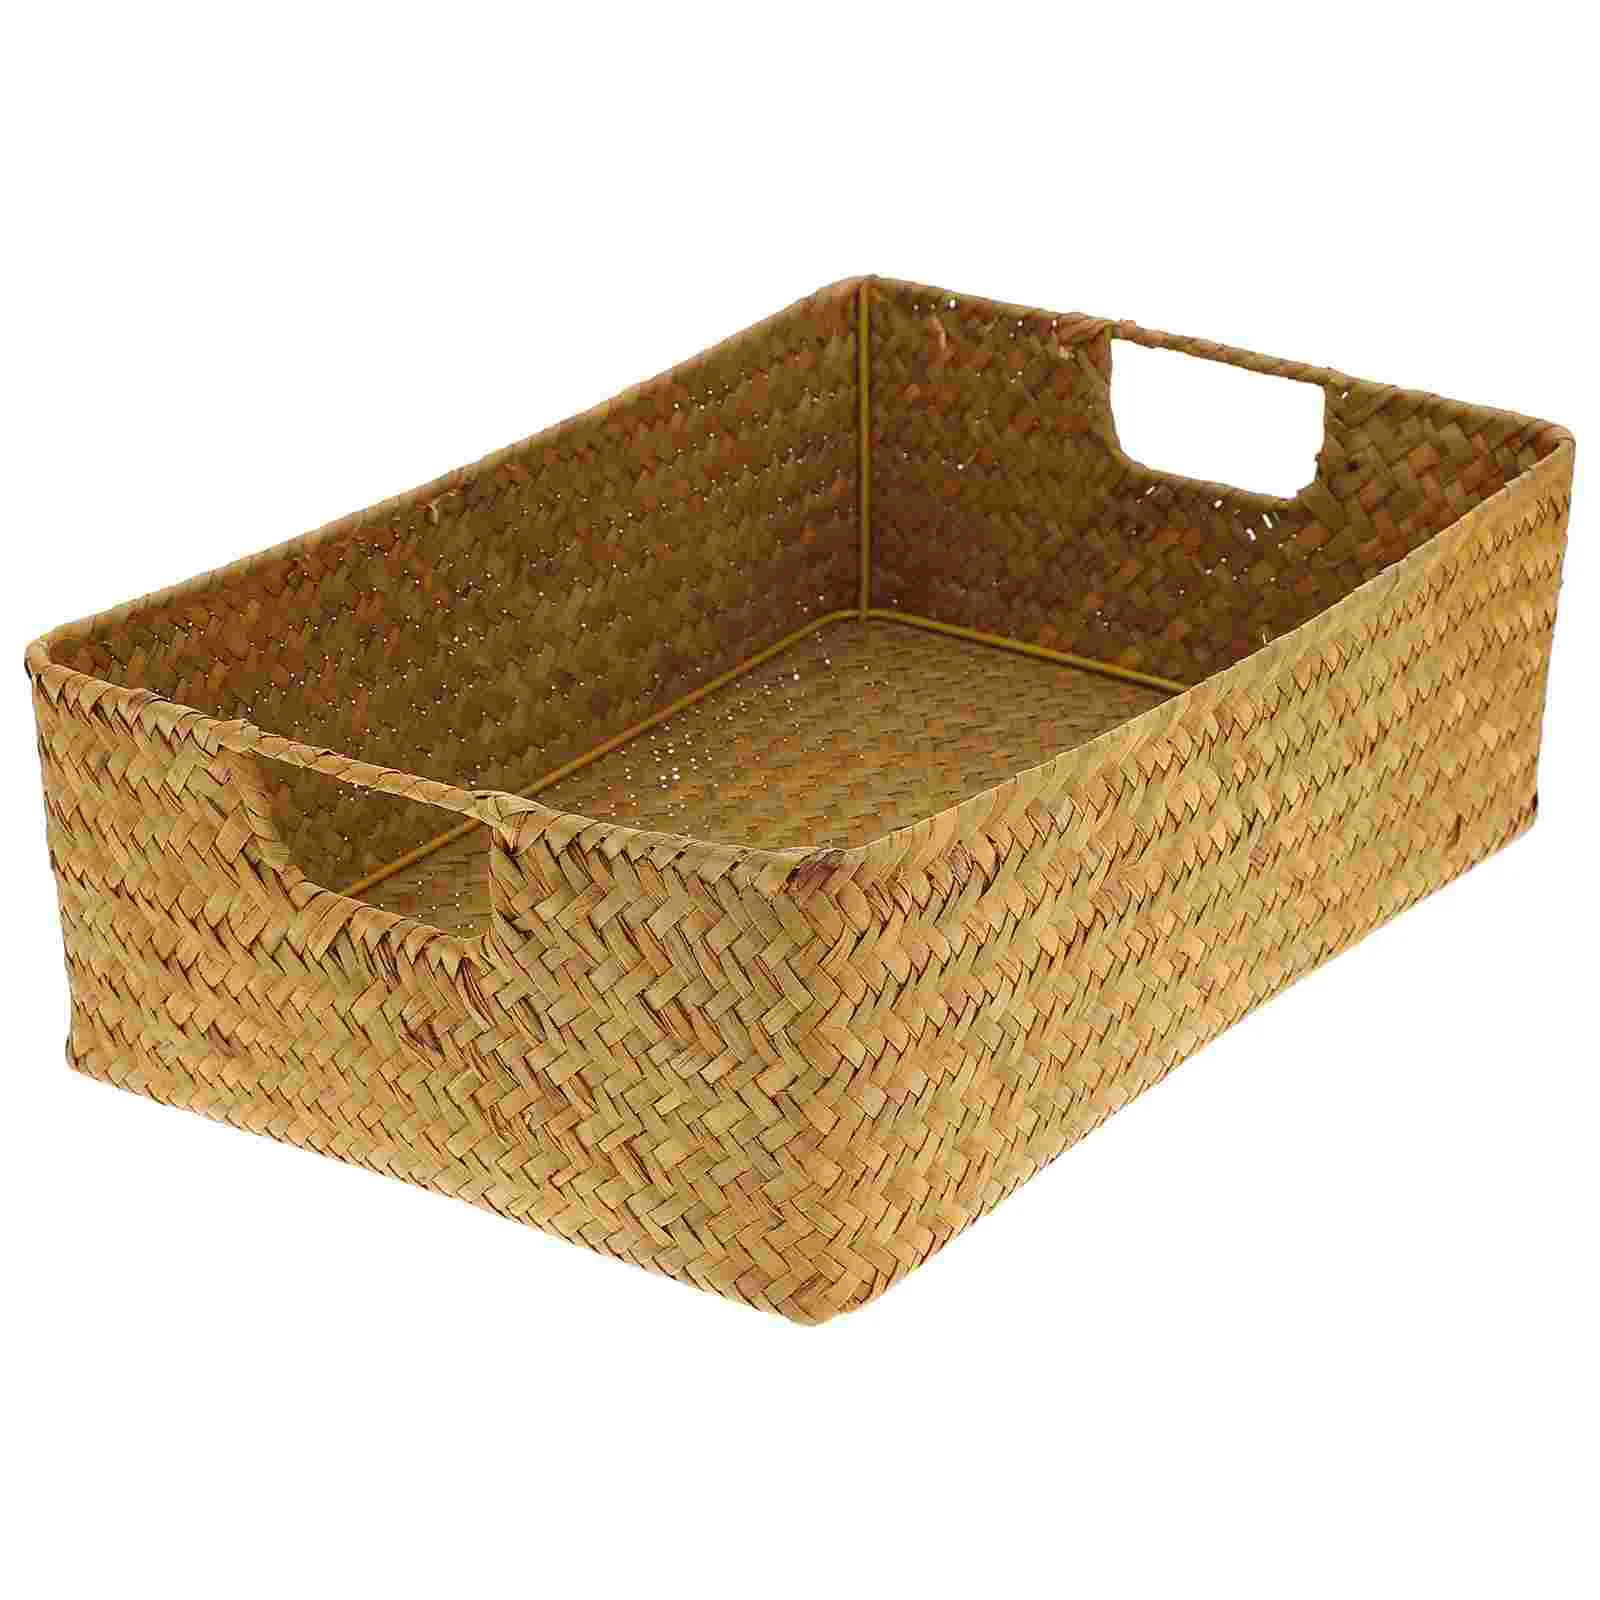 

Basket Storage Woven Baskets Wicker Seagrass Rattan Bins Organizer Fruit Seaweed Rectangular Serving Box Hamper Makeup Tray